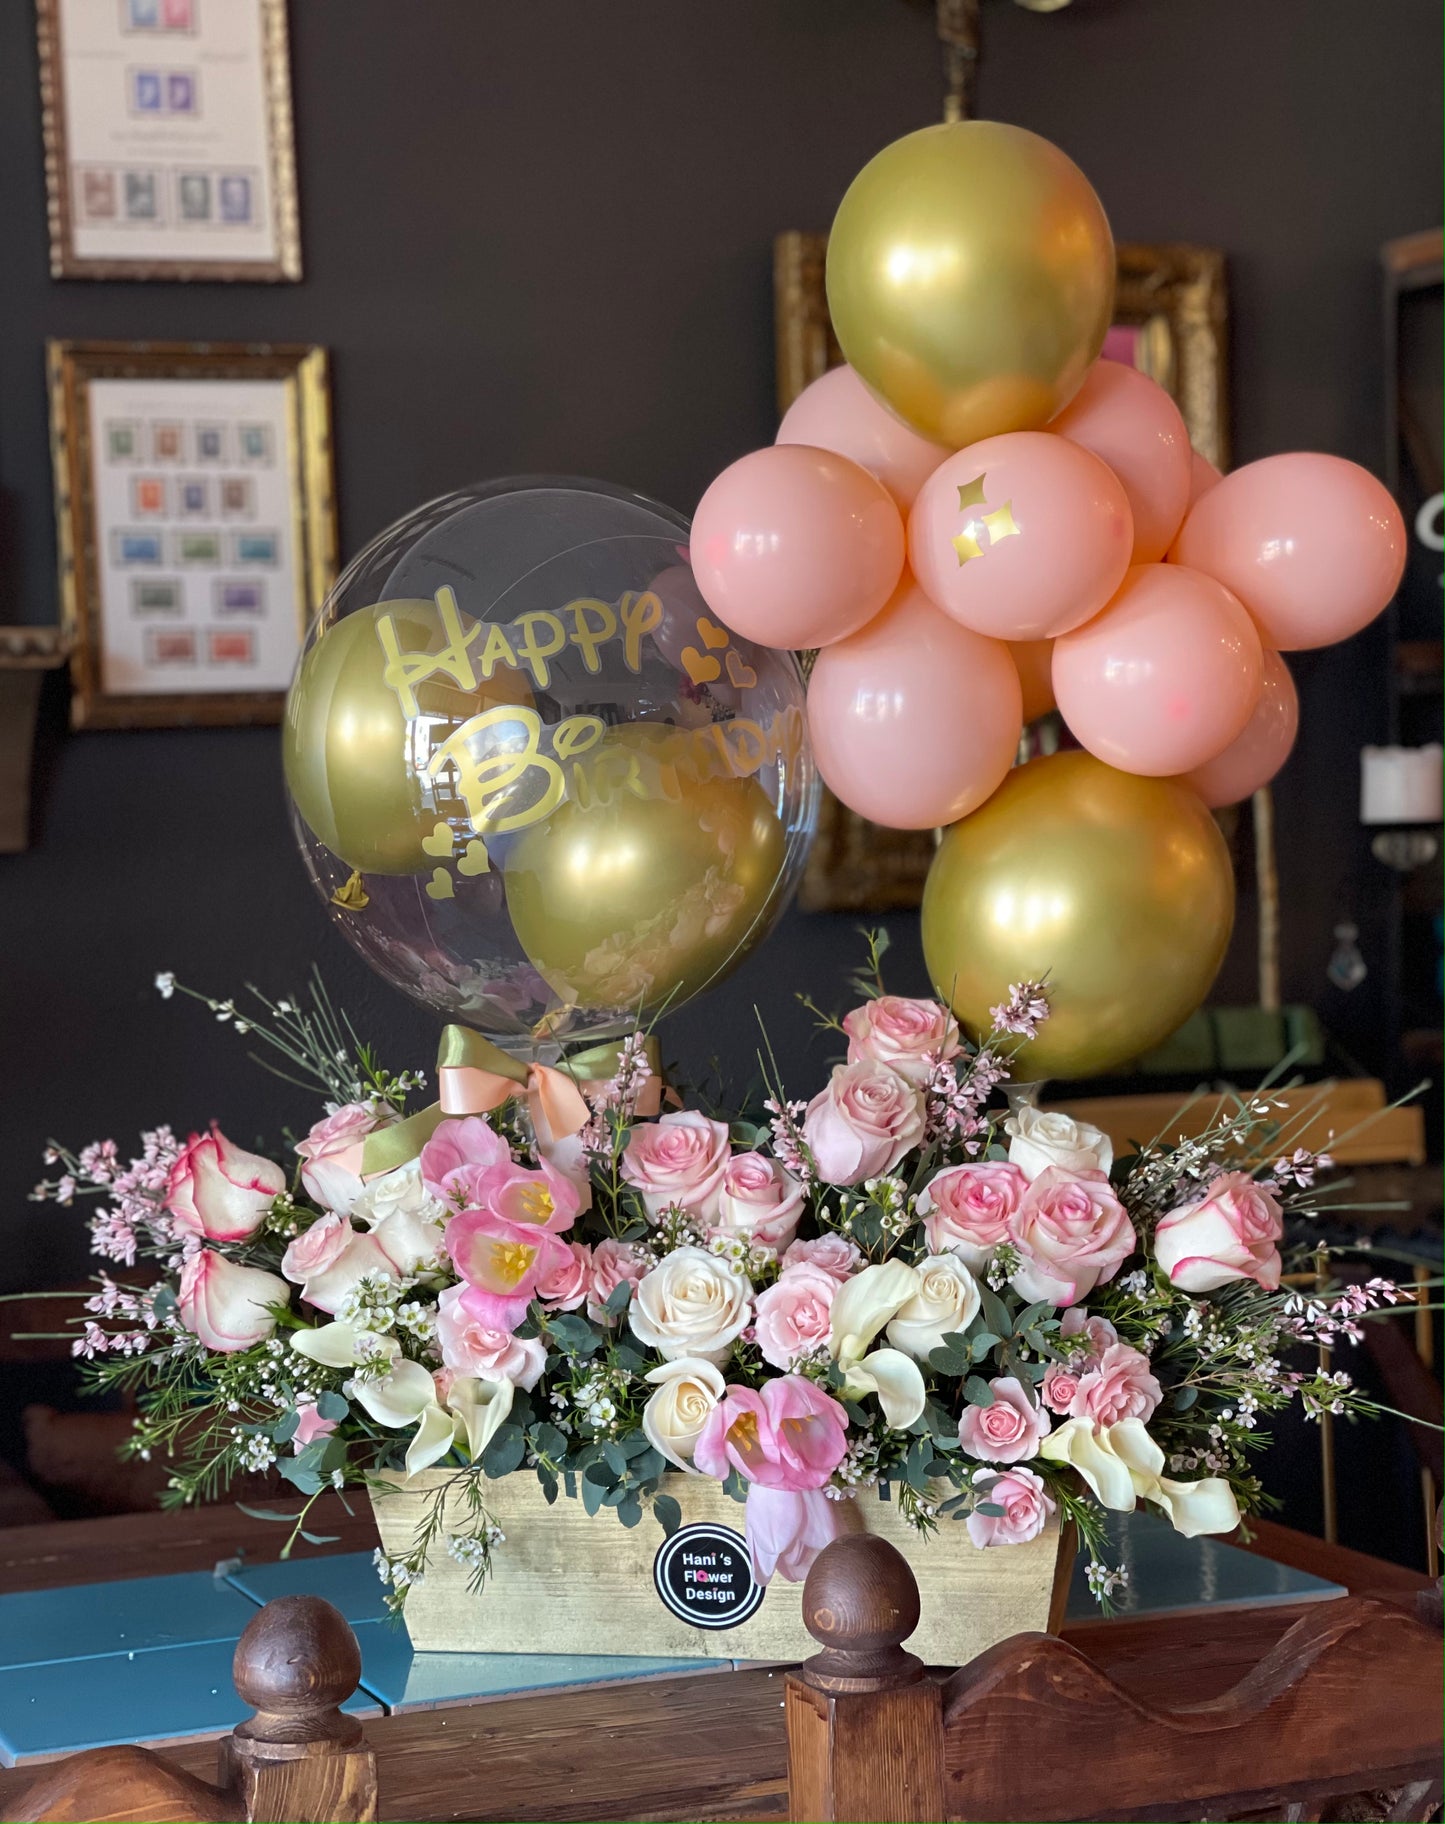 Birthday Arrangement With Balloons - 008